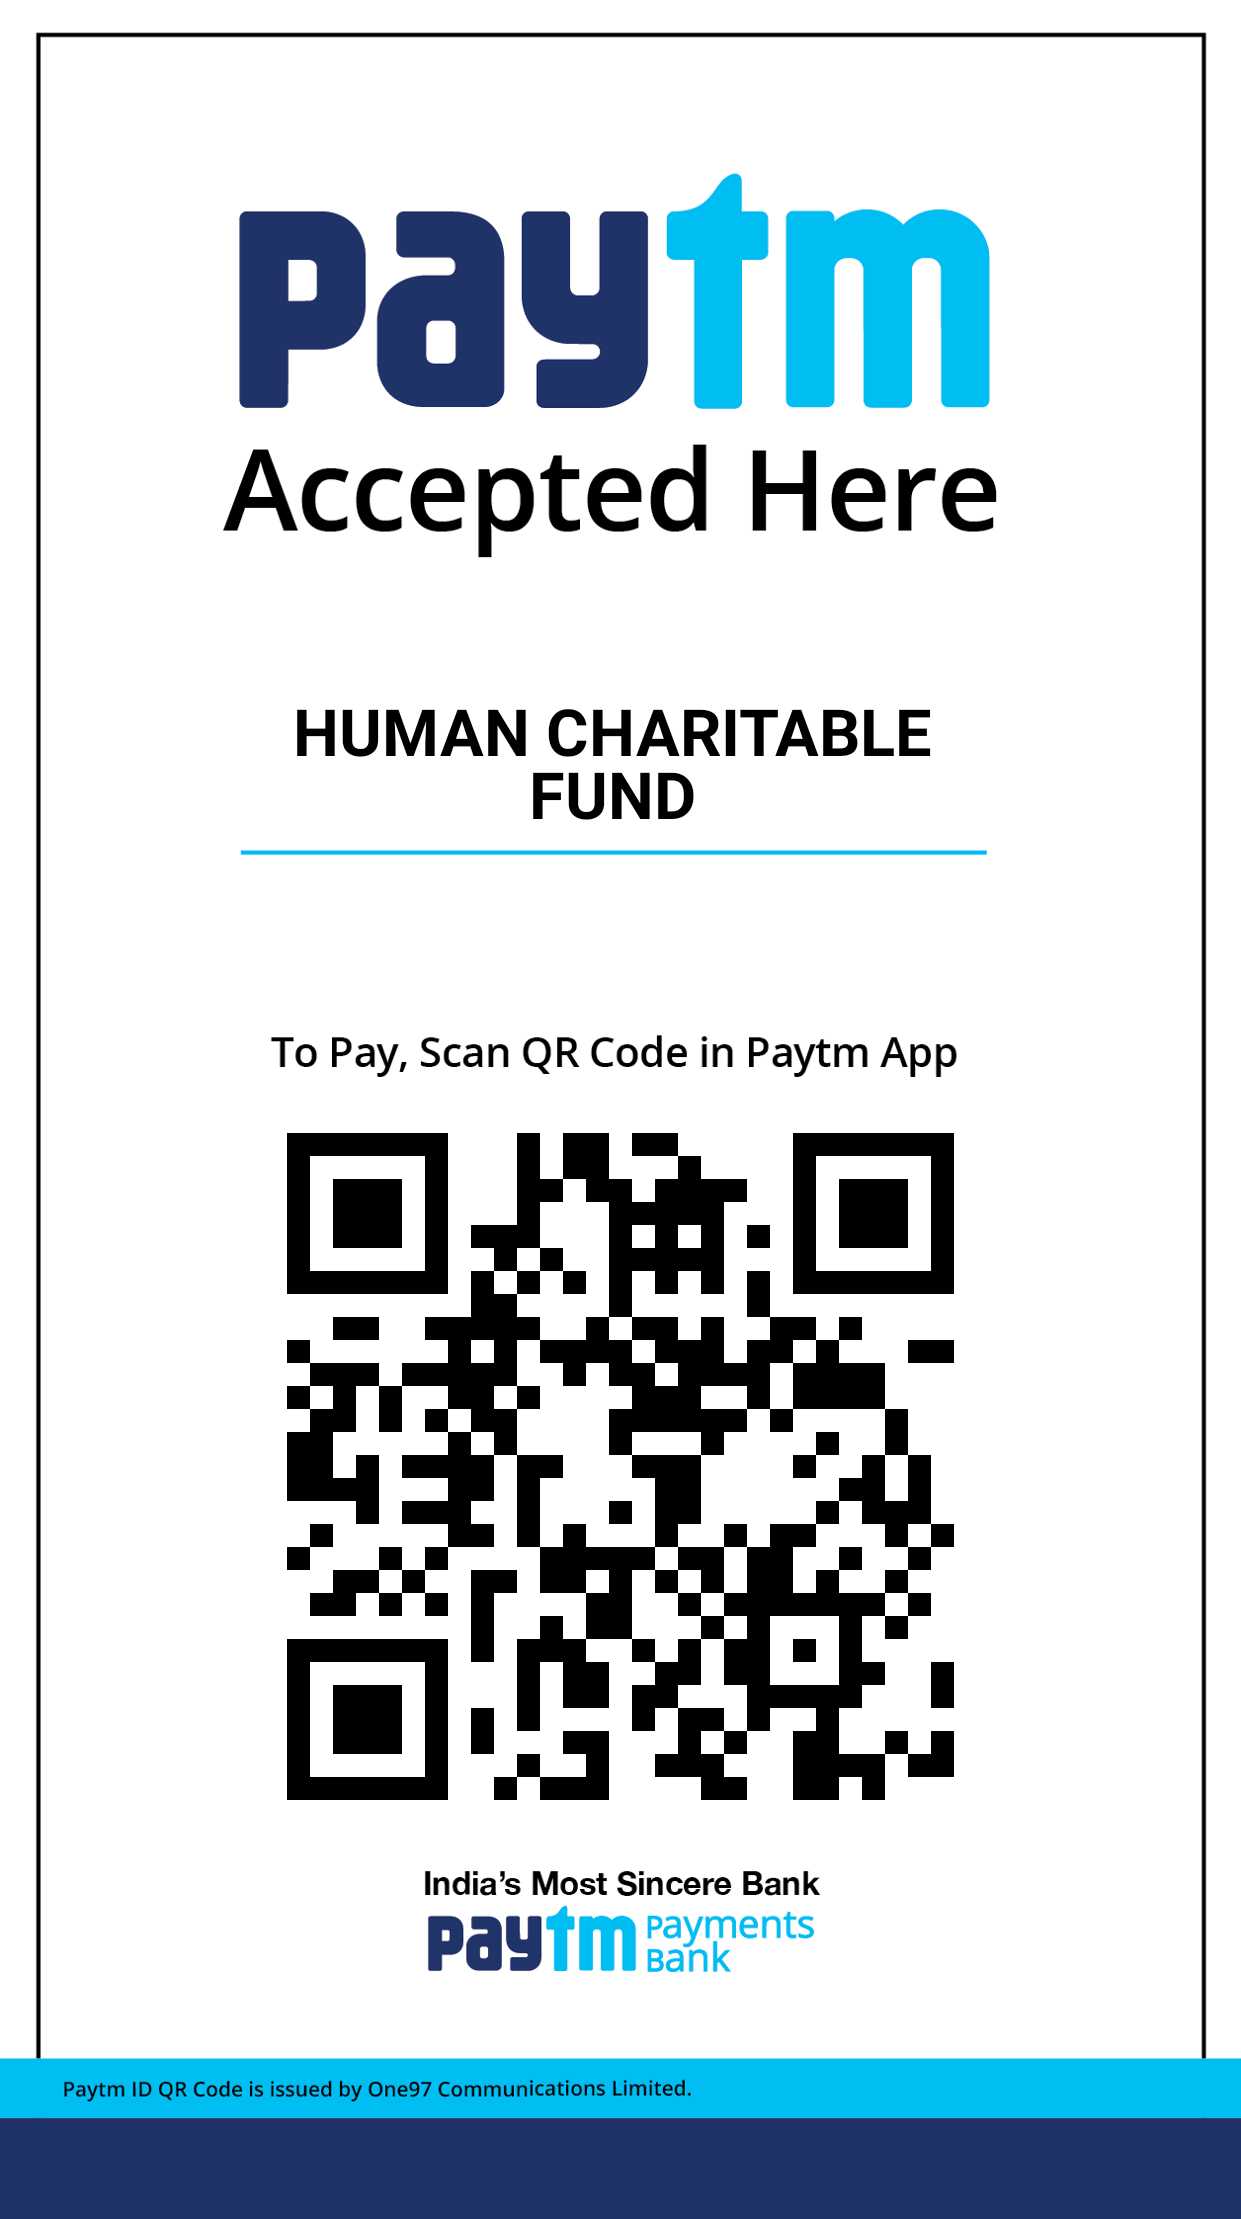 Human Charitable Organisation